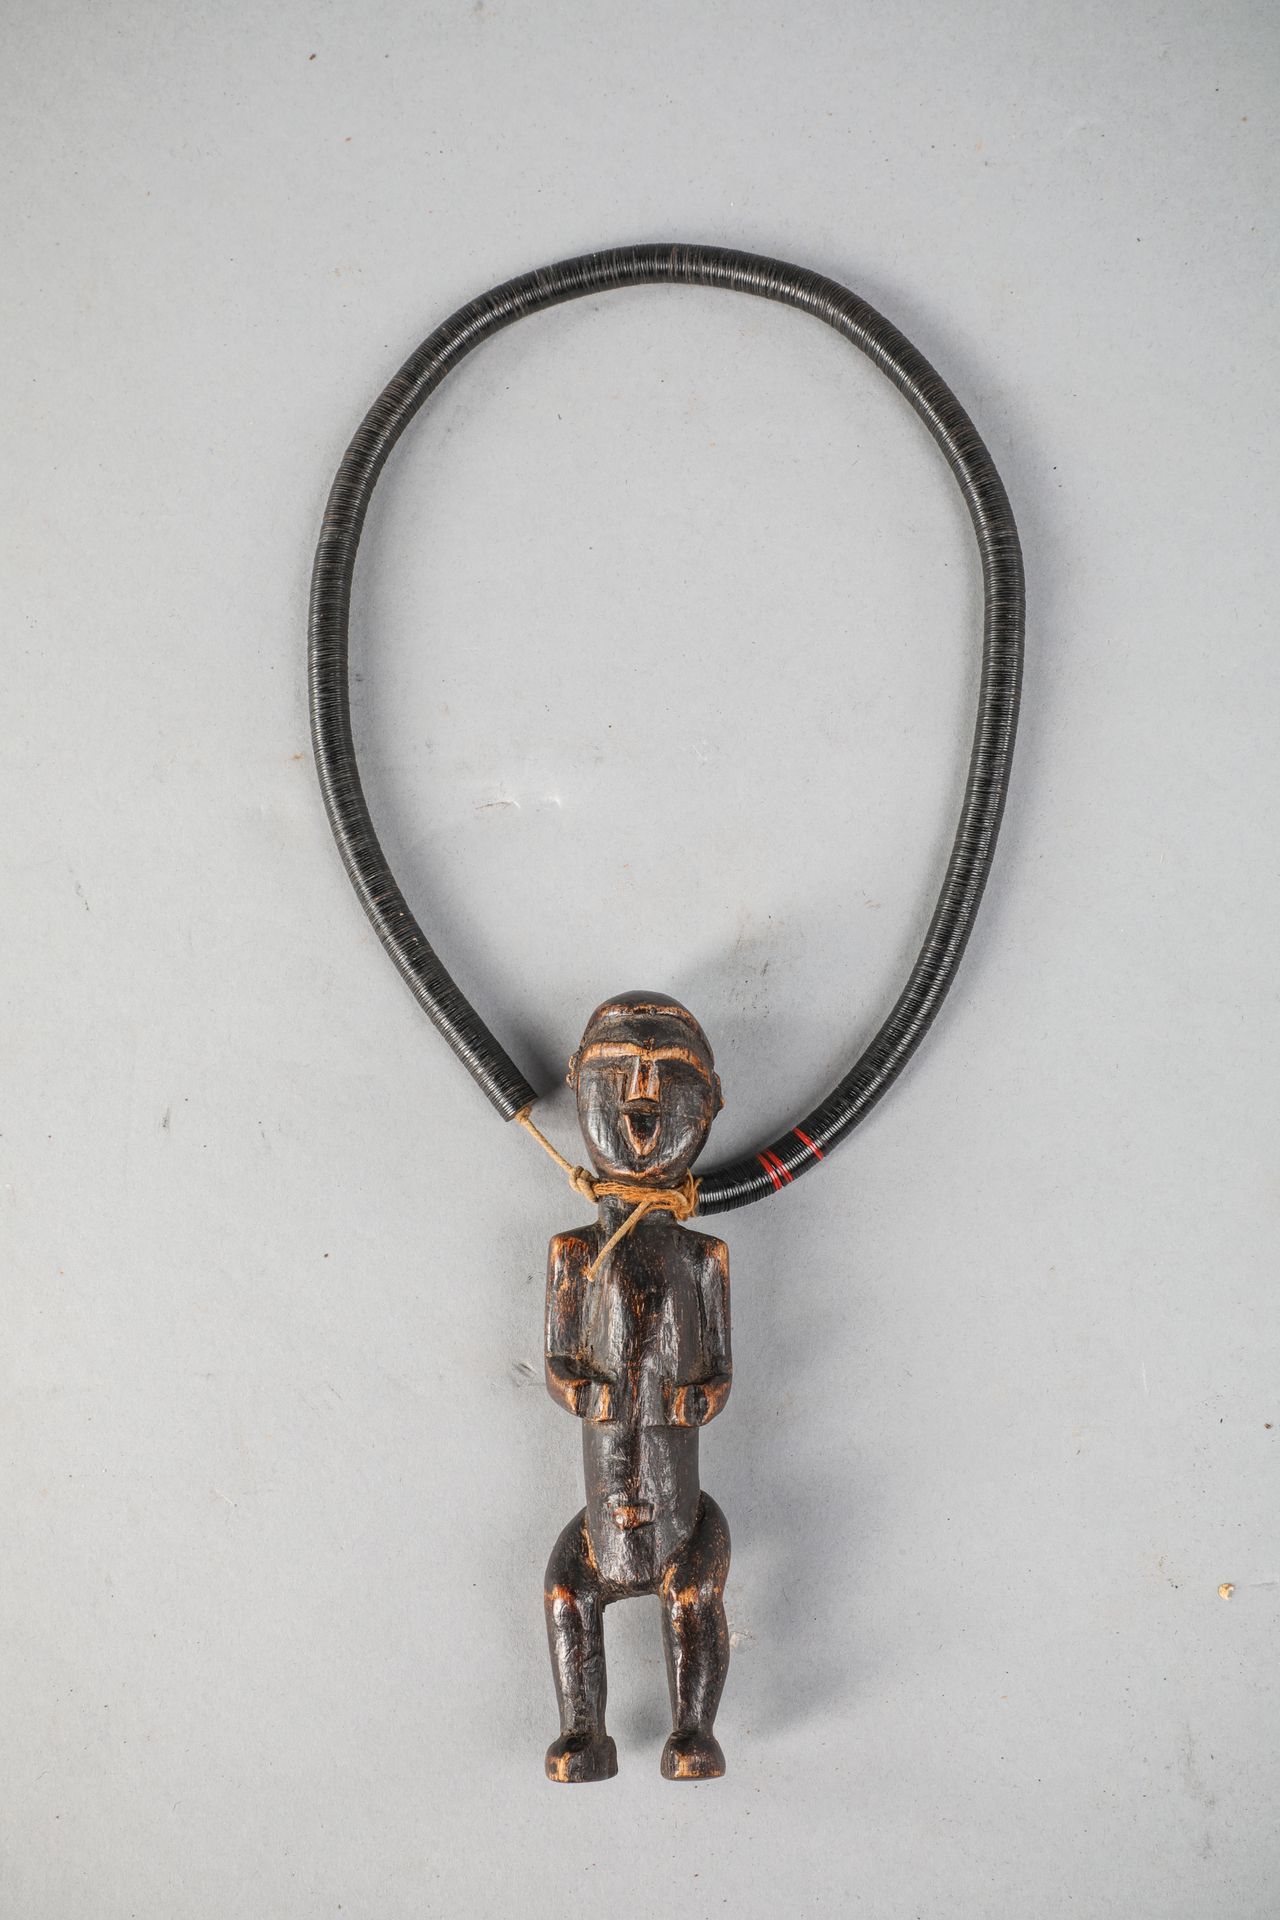 Null Lwalwa项链，刚果，其吊坠是一个带有几何线条的小字。木质，有黑褐色的铜锈，角质珠子。宽35厘米，人物高11厘米。